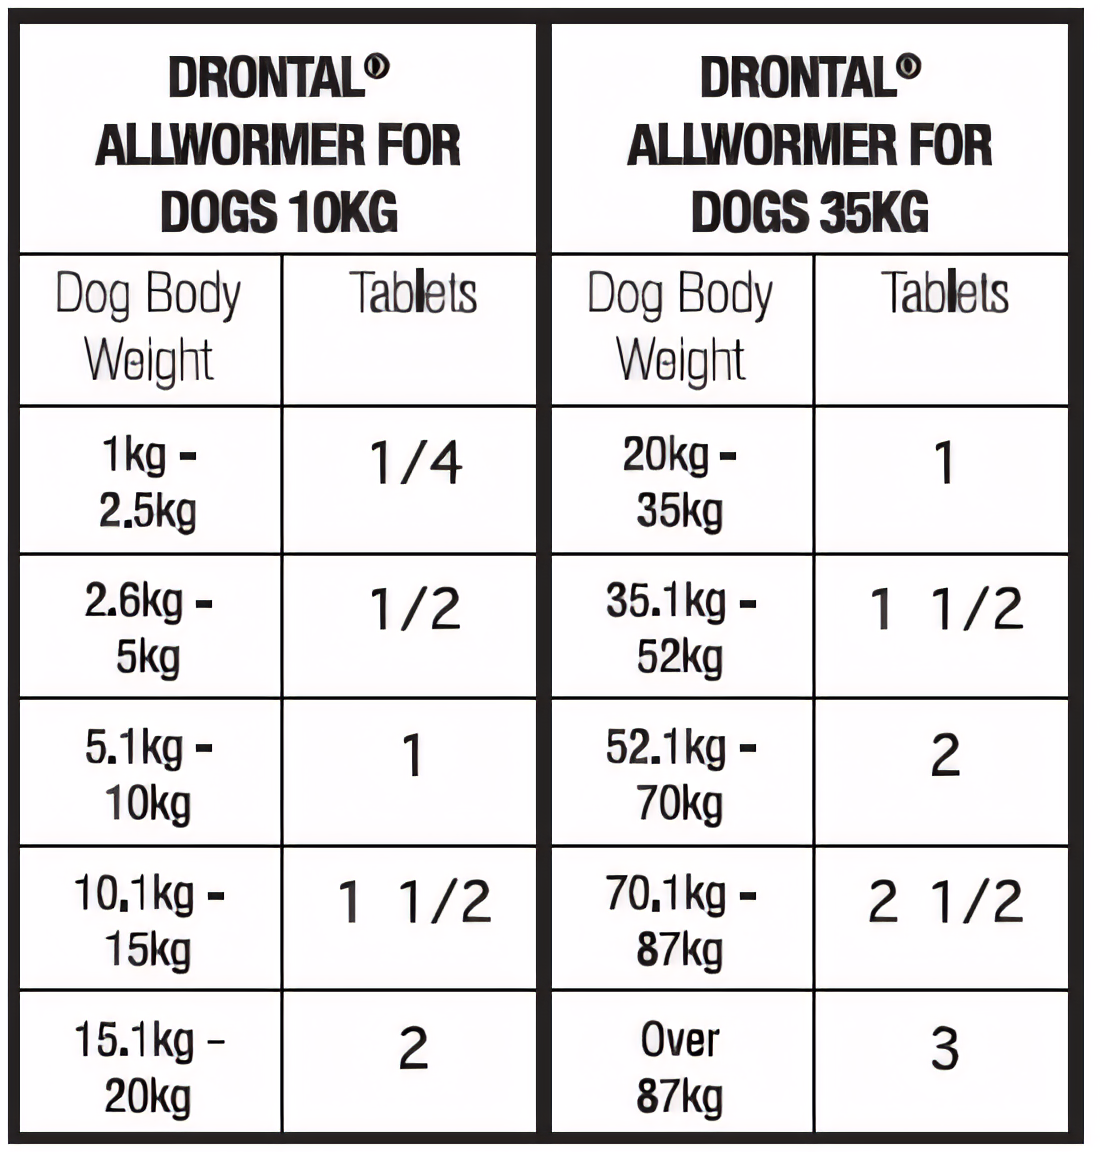 Drontal Allwormer：为狗提供全面的蠕虫保护